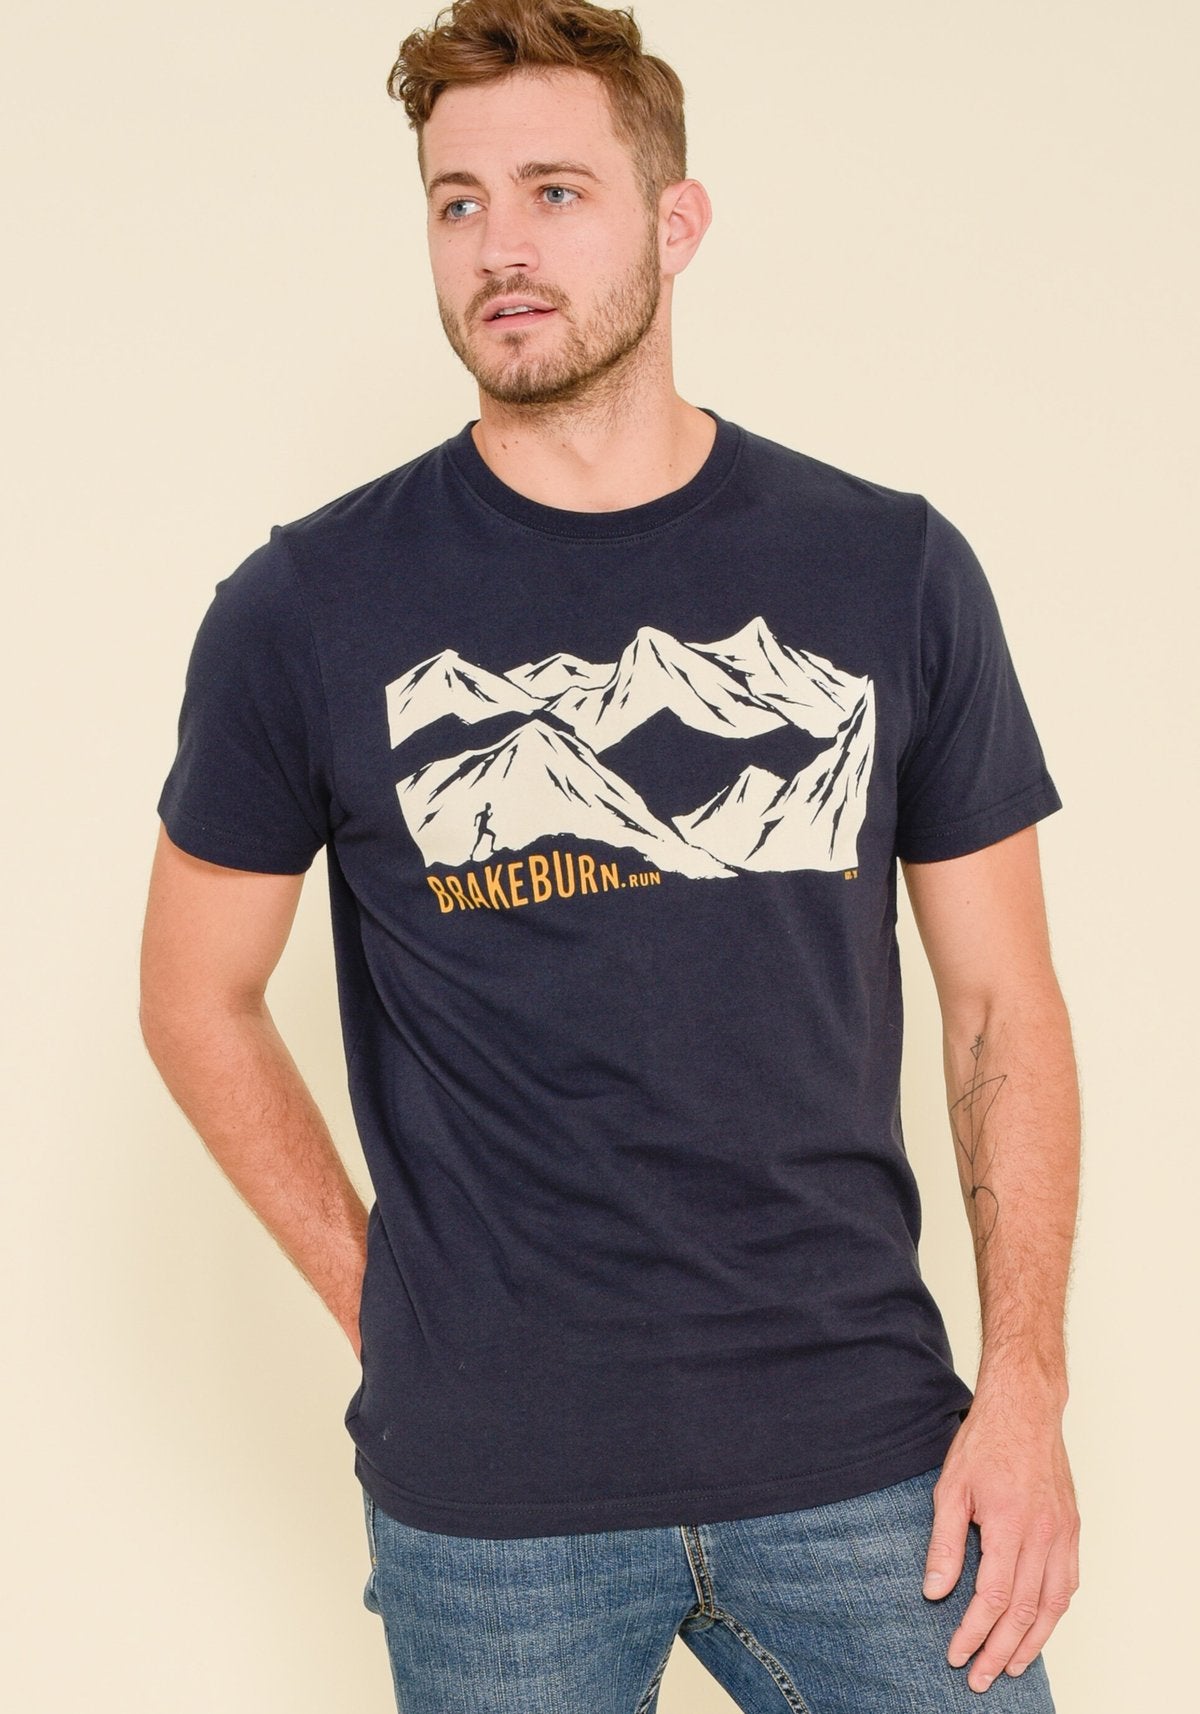 Brakeburn Running Mountains T-Shirt - Navy Blue